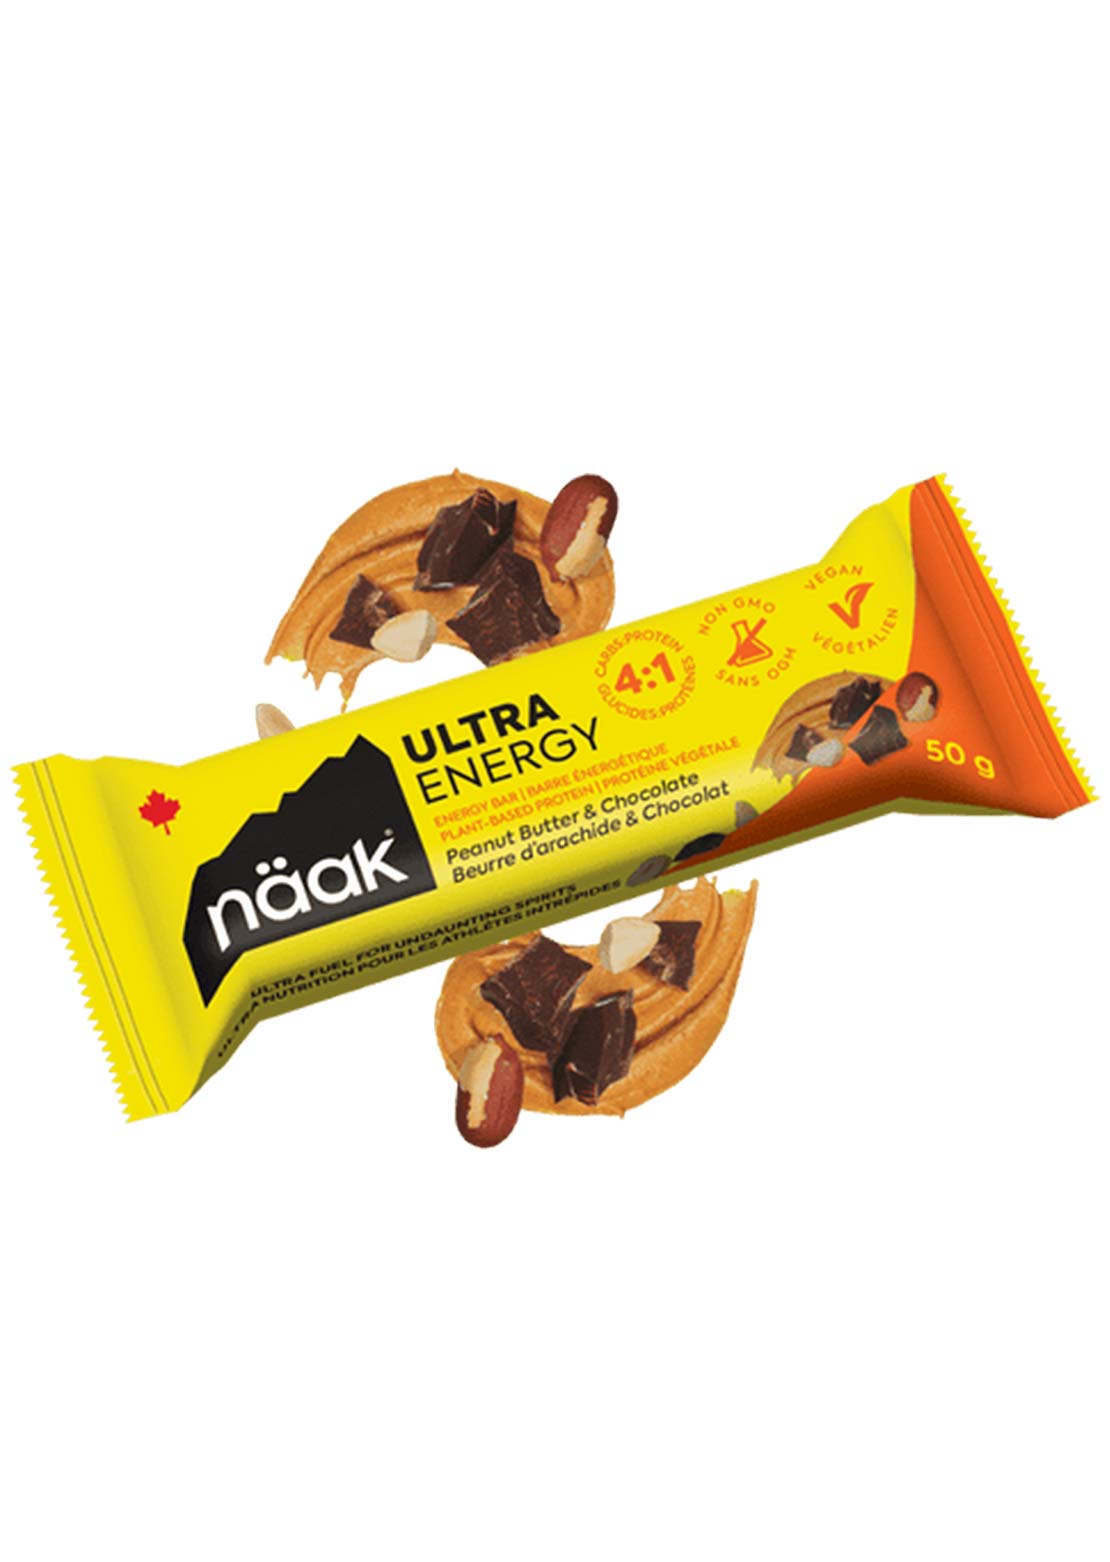 NAAK Peanut Butter &amp; Chocolate Ultra Energy Bars